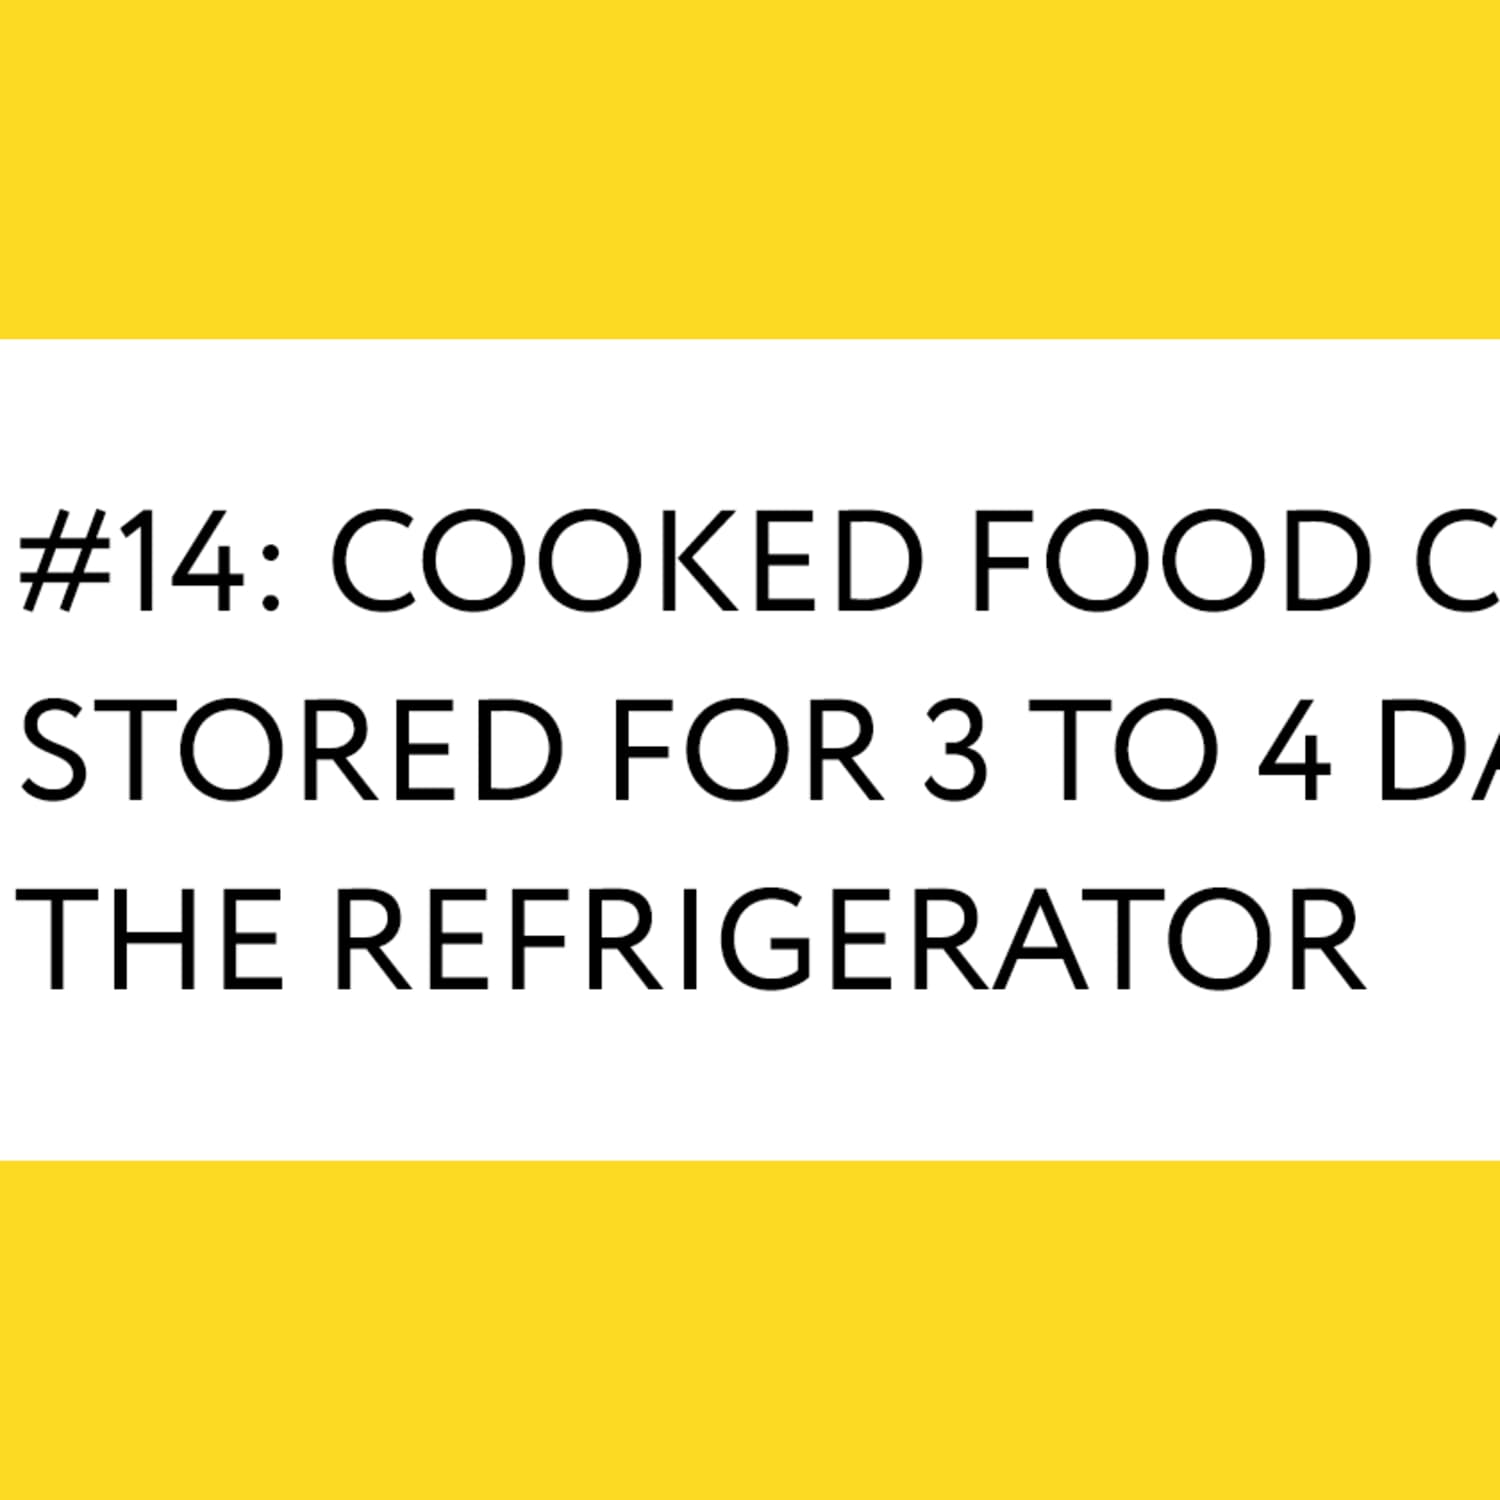 Shelf Life Of Food Refrigerator Freezer Storage Chart